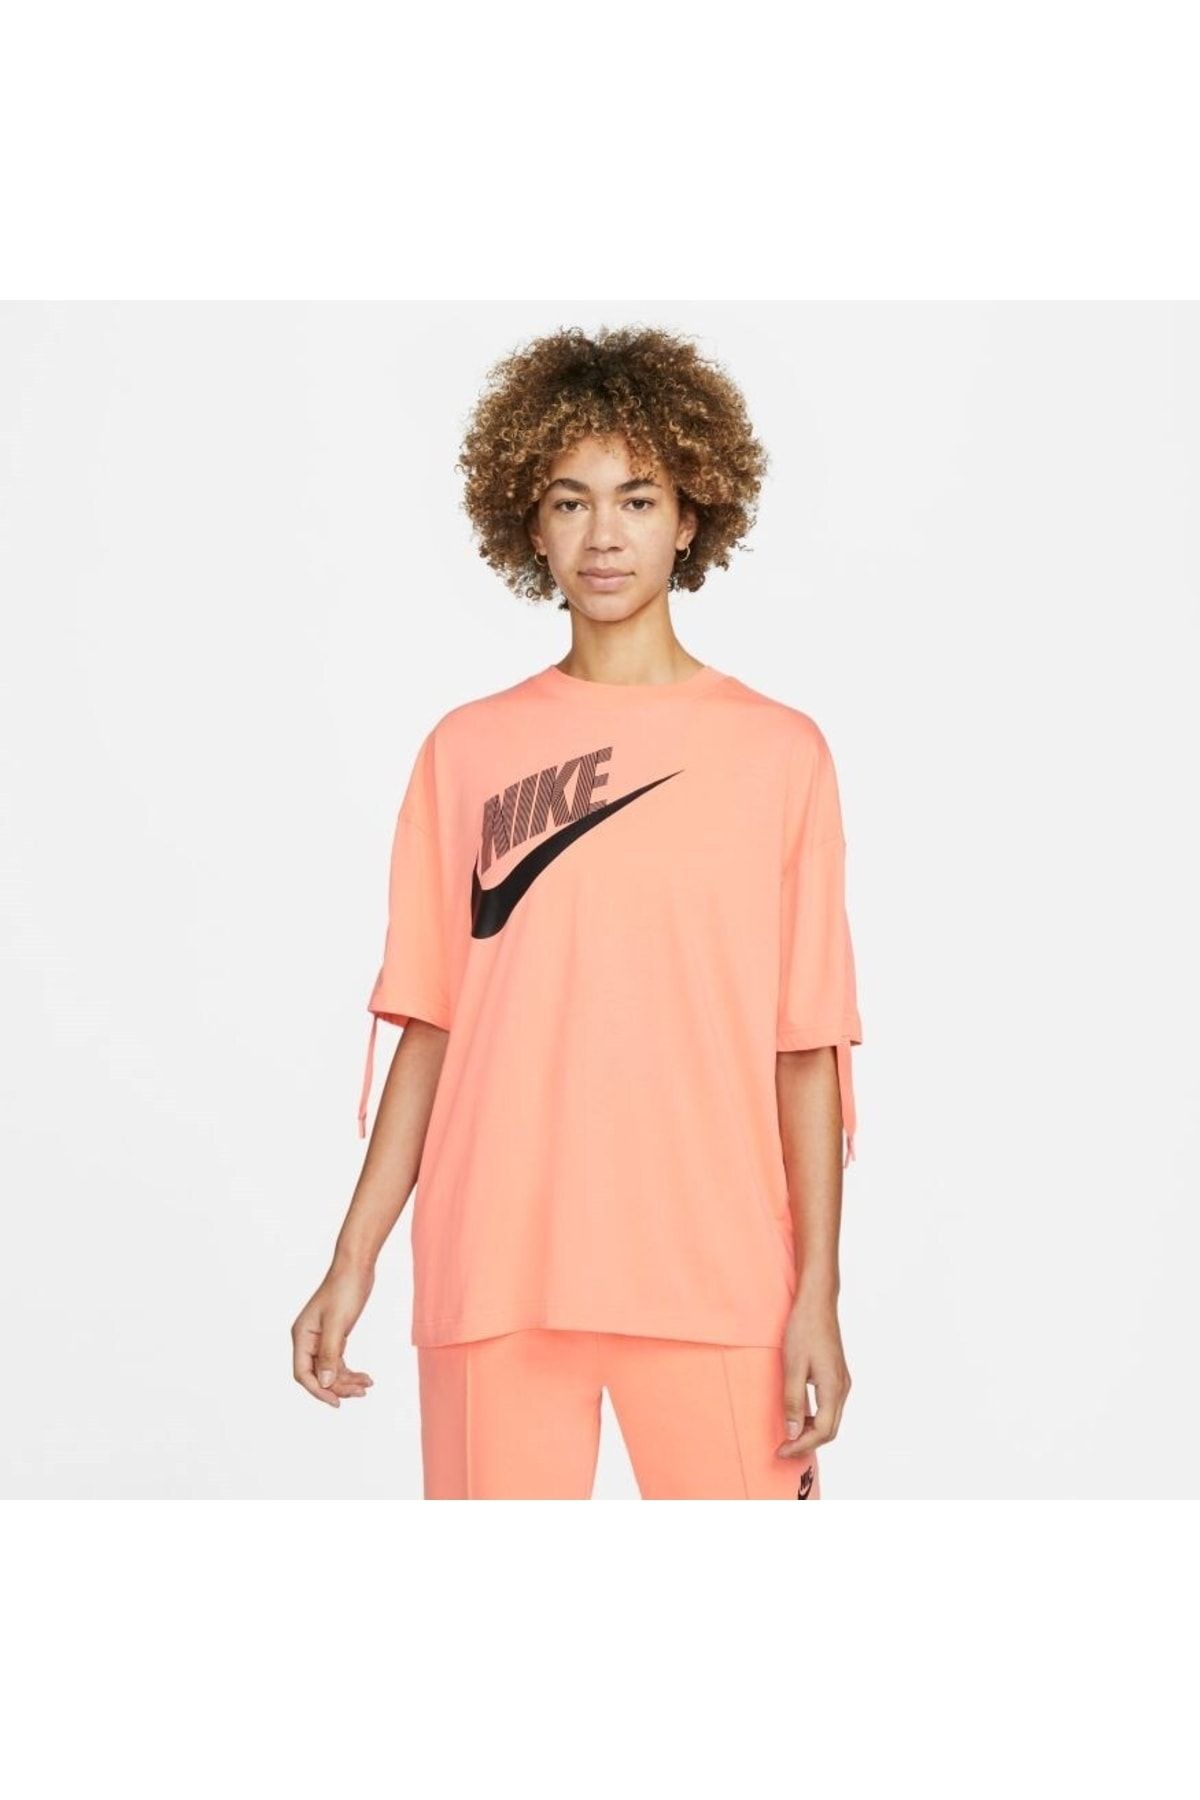 Nike Sportswear Women's Dance T-shirt